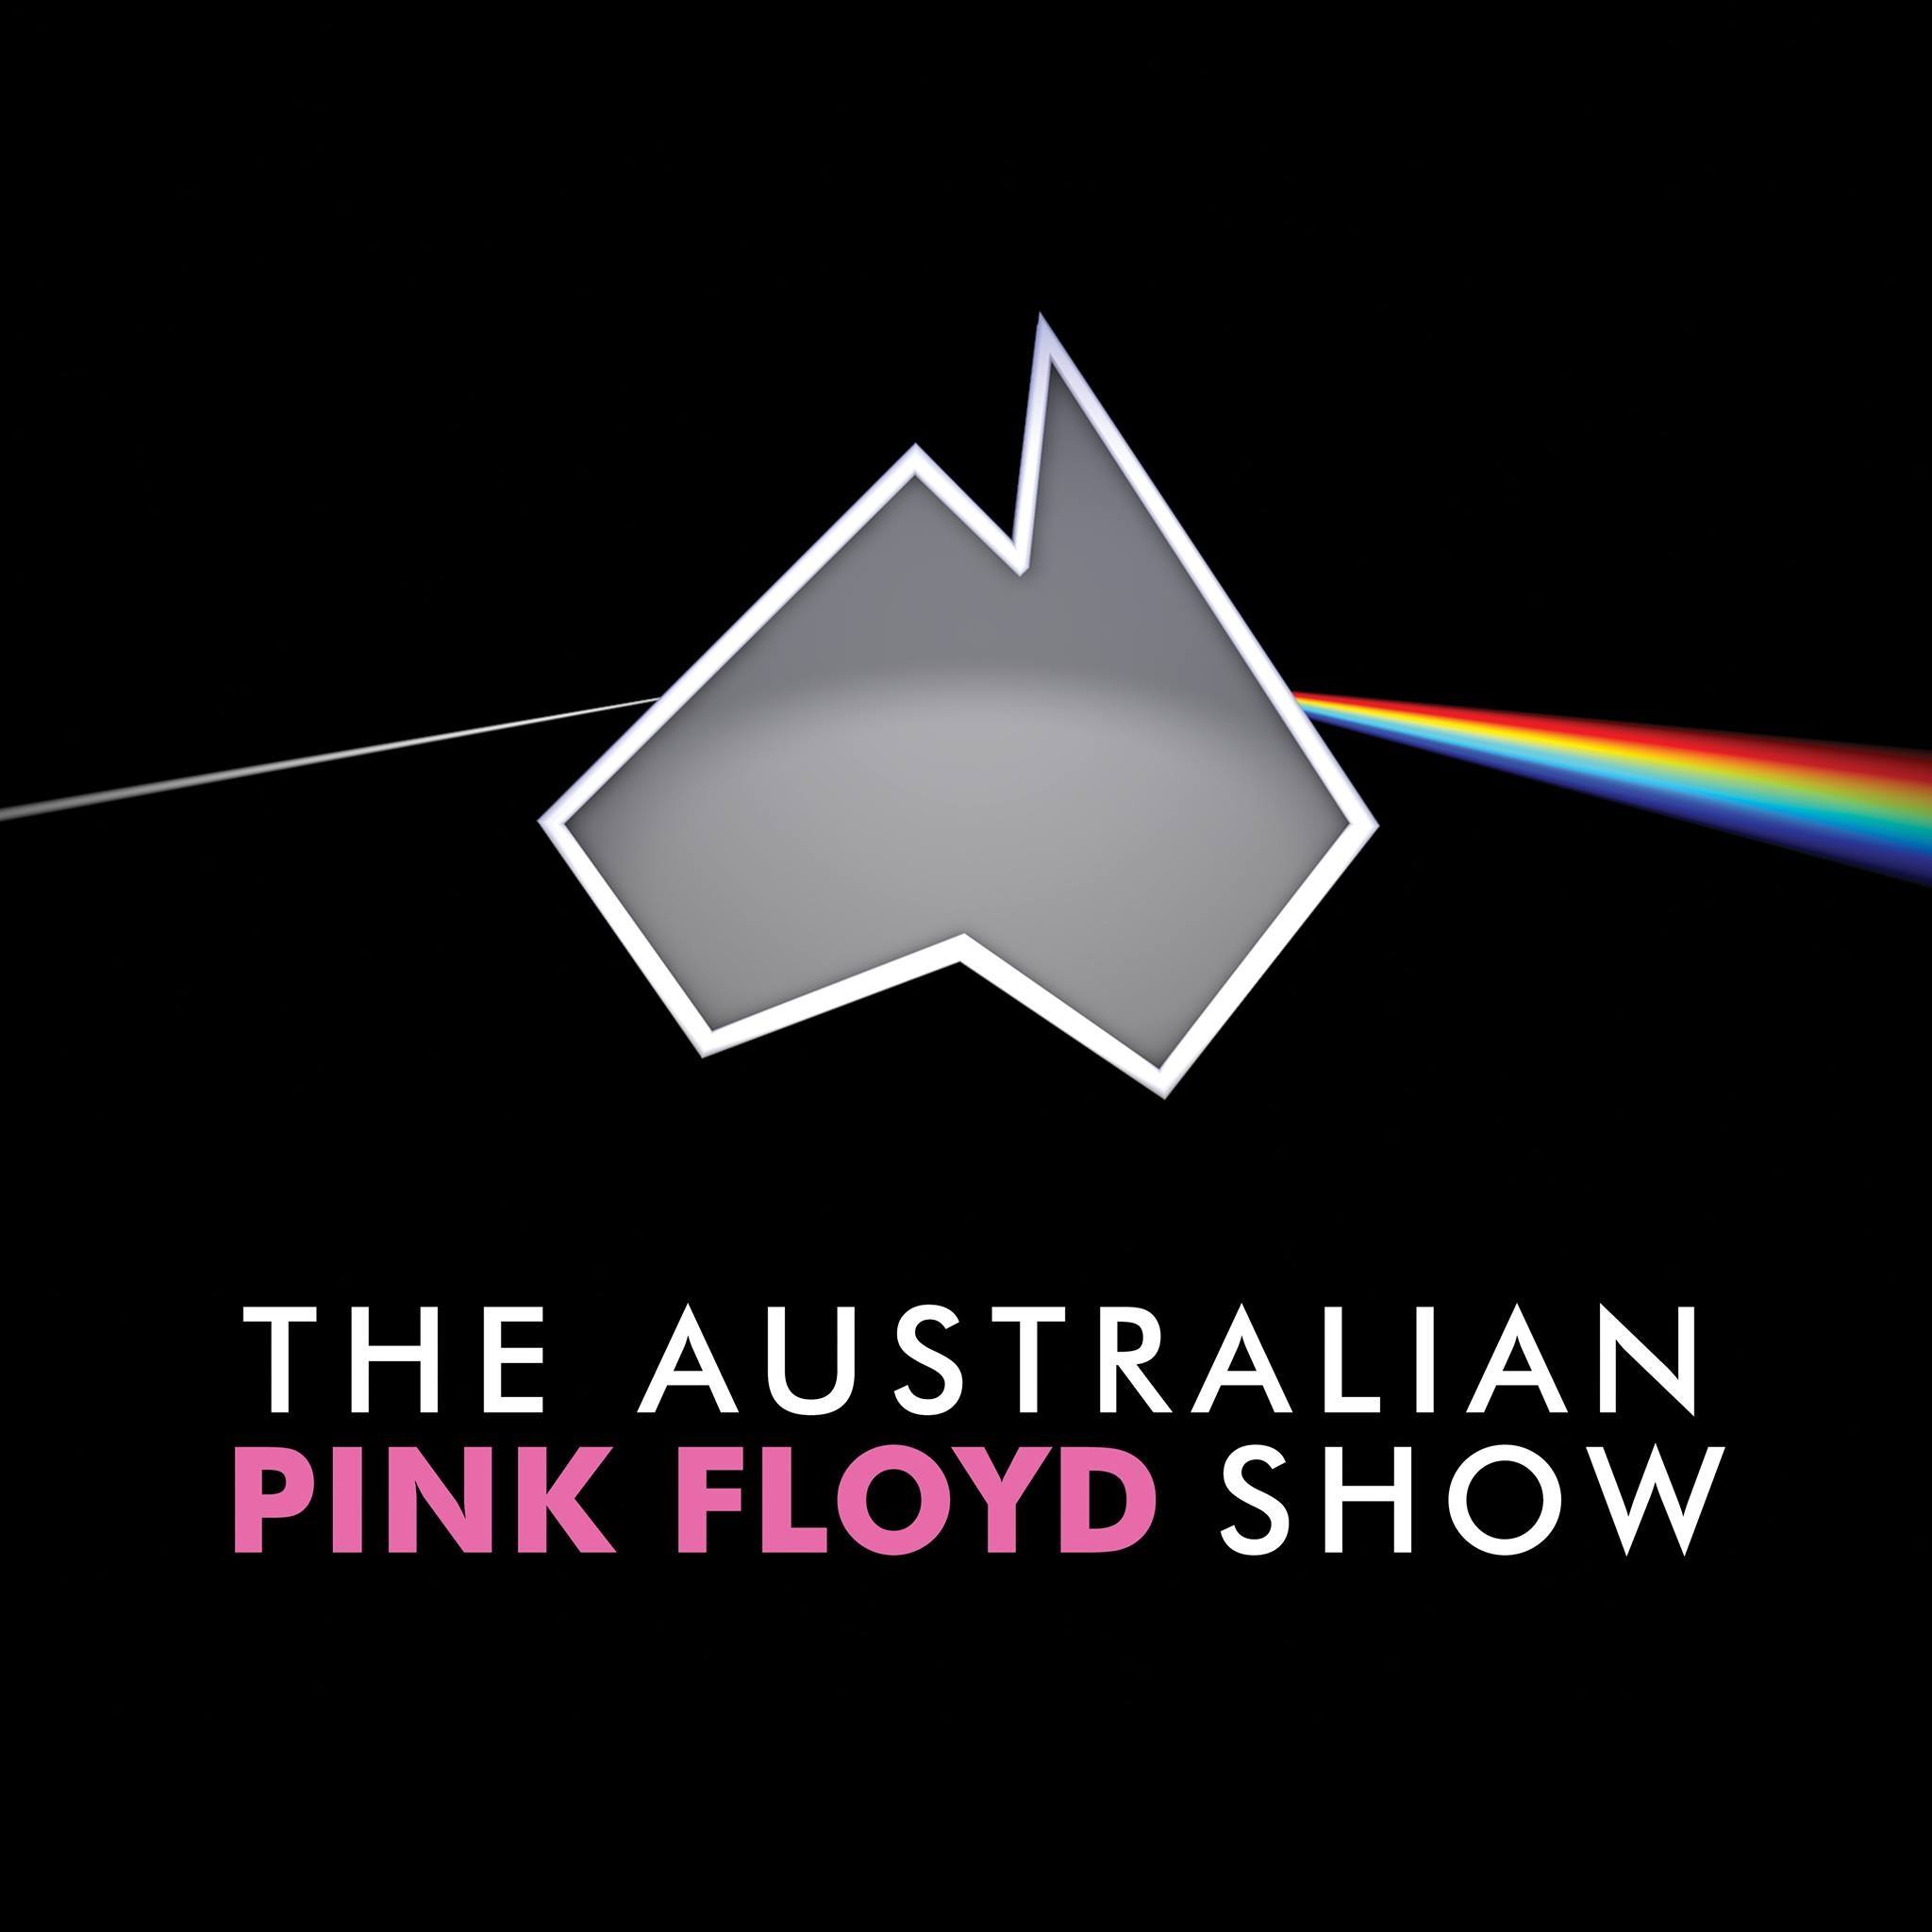 The Australian Pink Floyd Show at Bonus Arena Hull Tickets